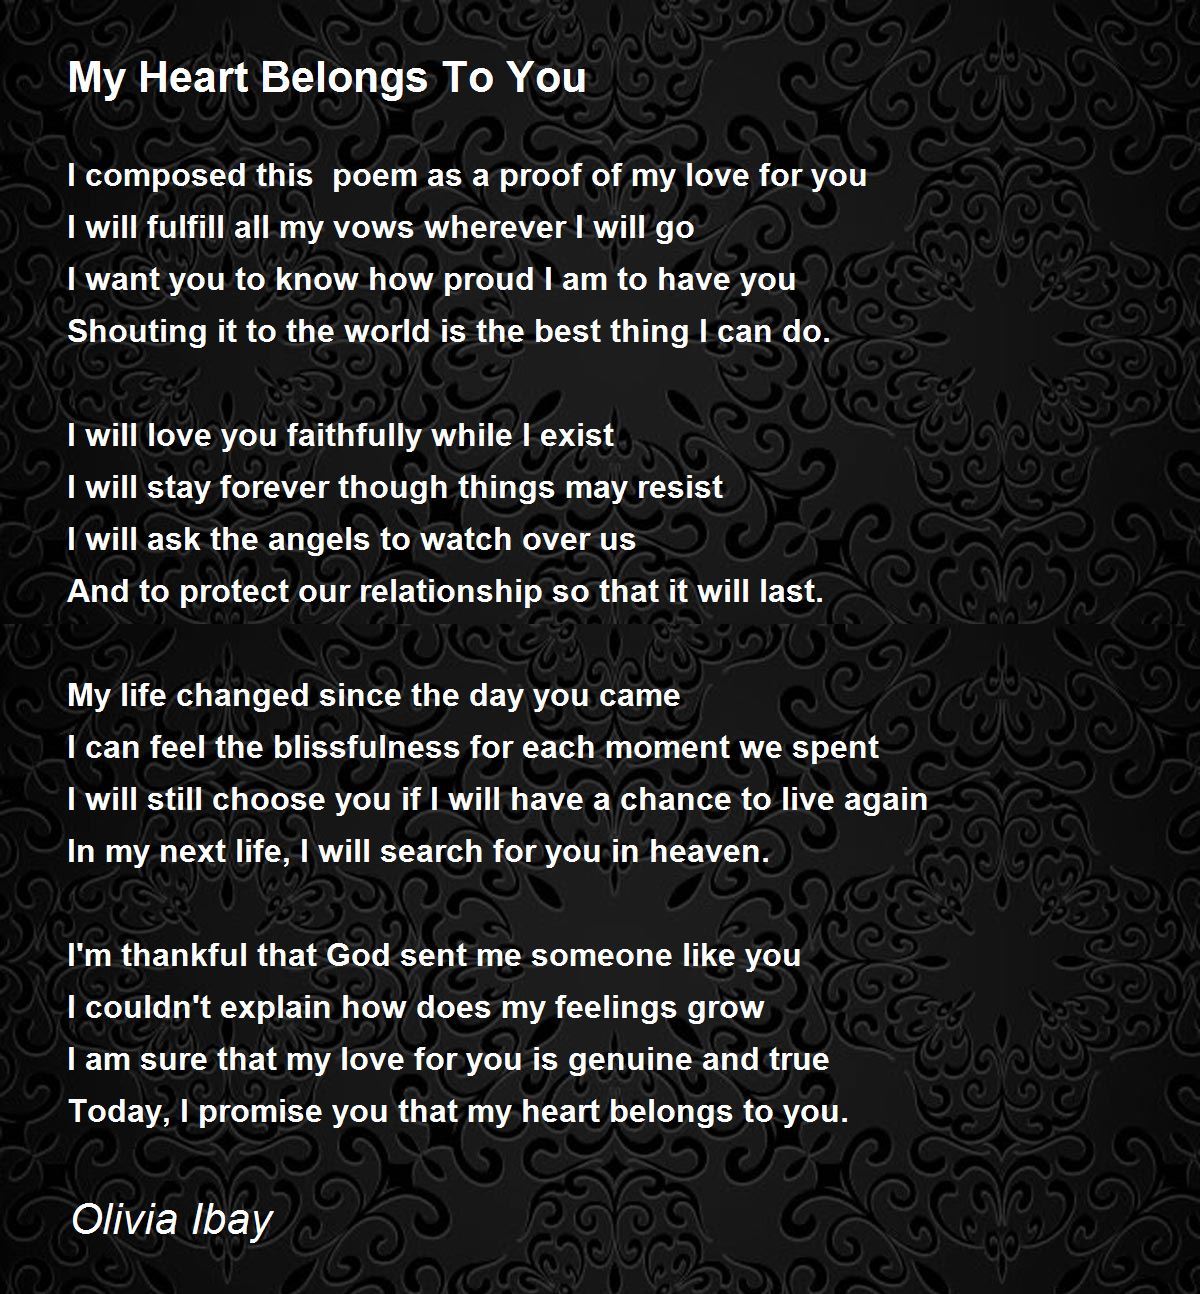 My Heart Belongs To You - My Heart Belongs To You Poem by Olivia Ibay